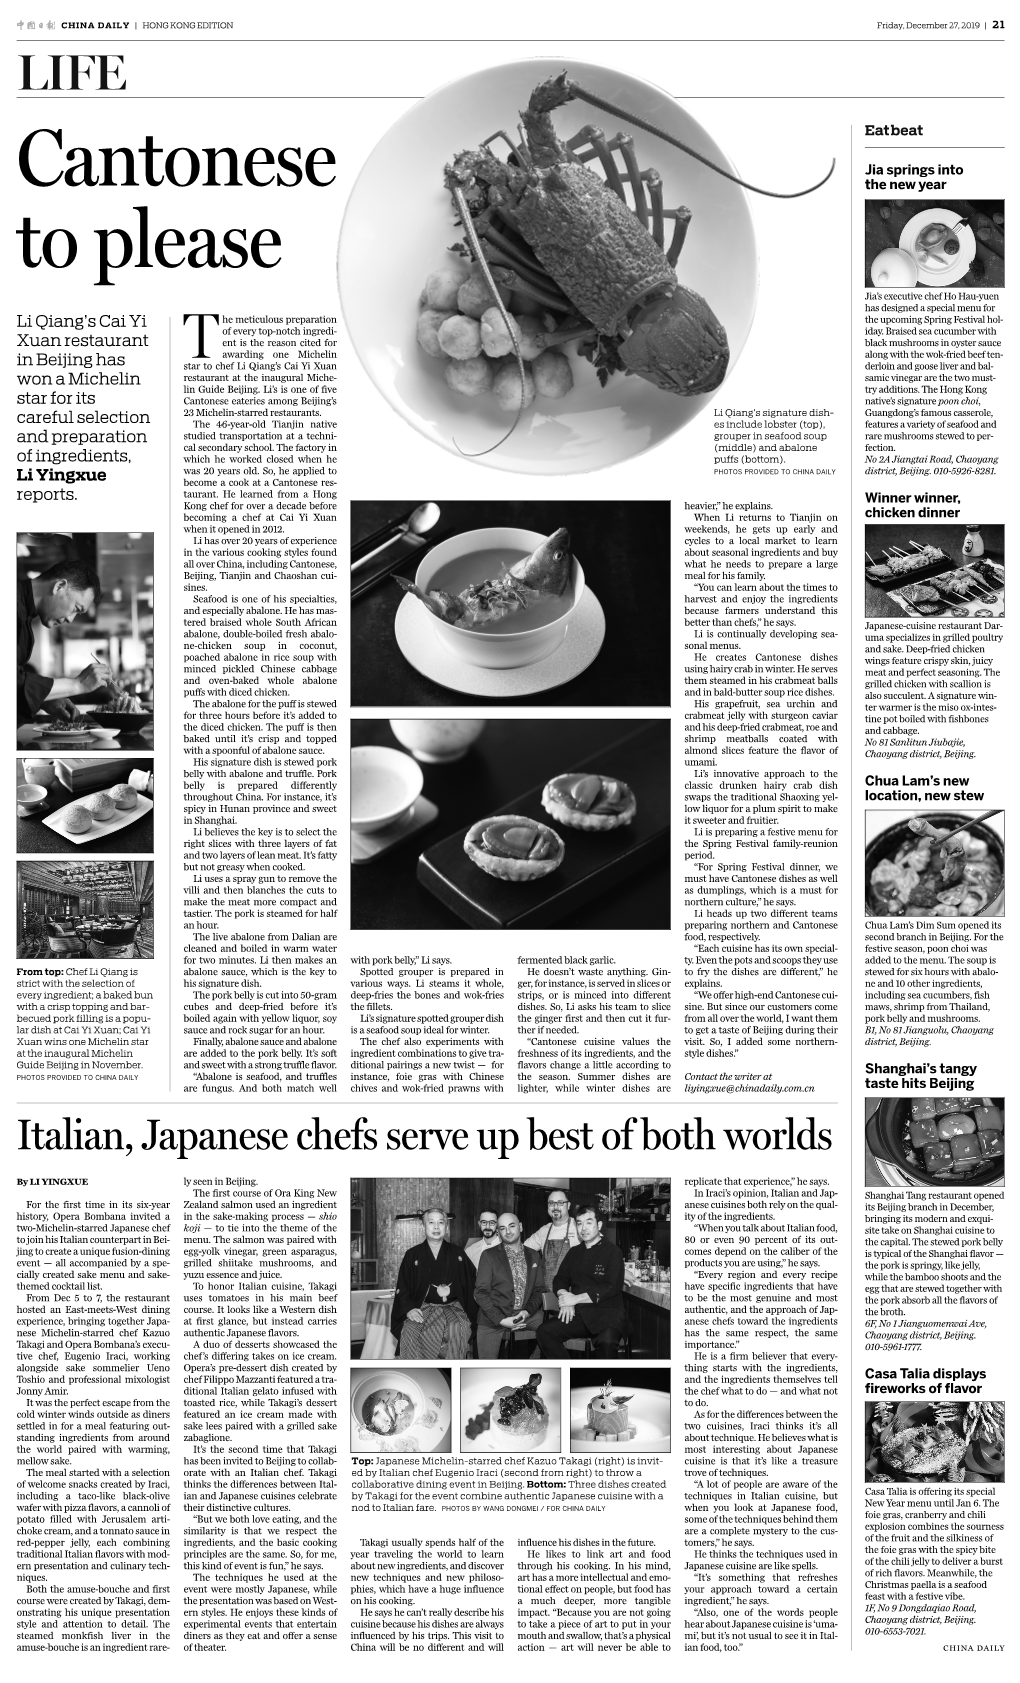 Italian, Japanese Chefs Serve up Best of Both Worlds